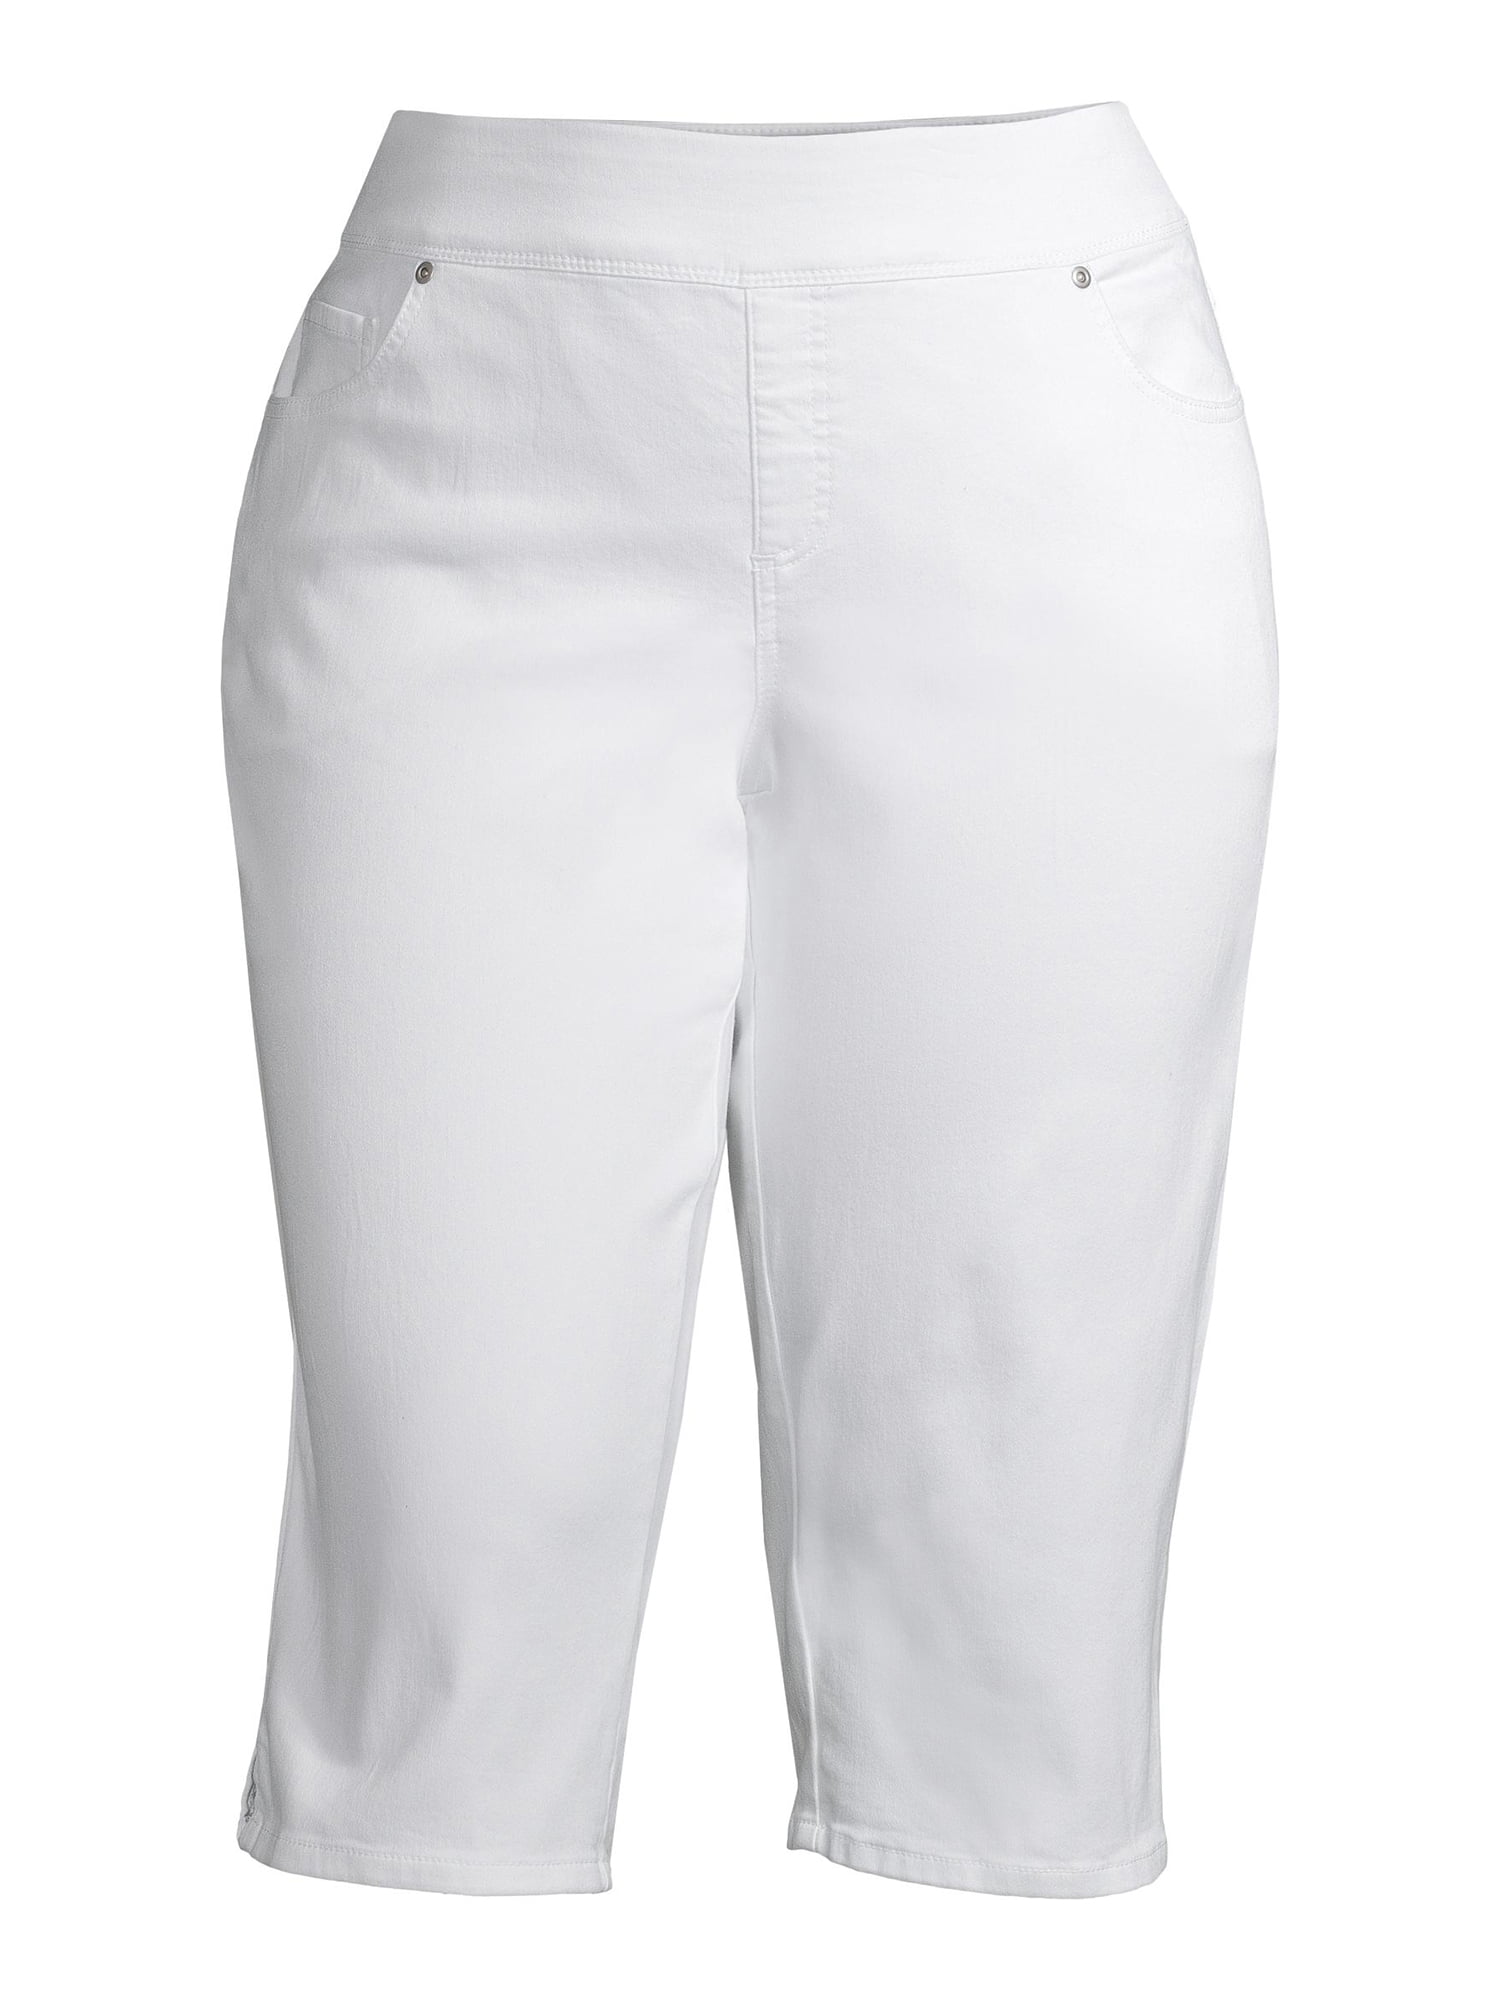 Roaman's Women's Plus Size Scallop-hem Essential Stretch Capri - 14/16,  White : Target